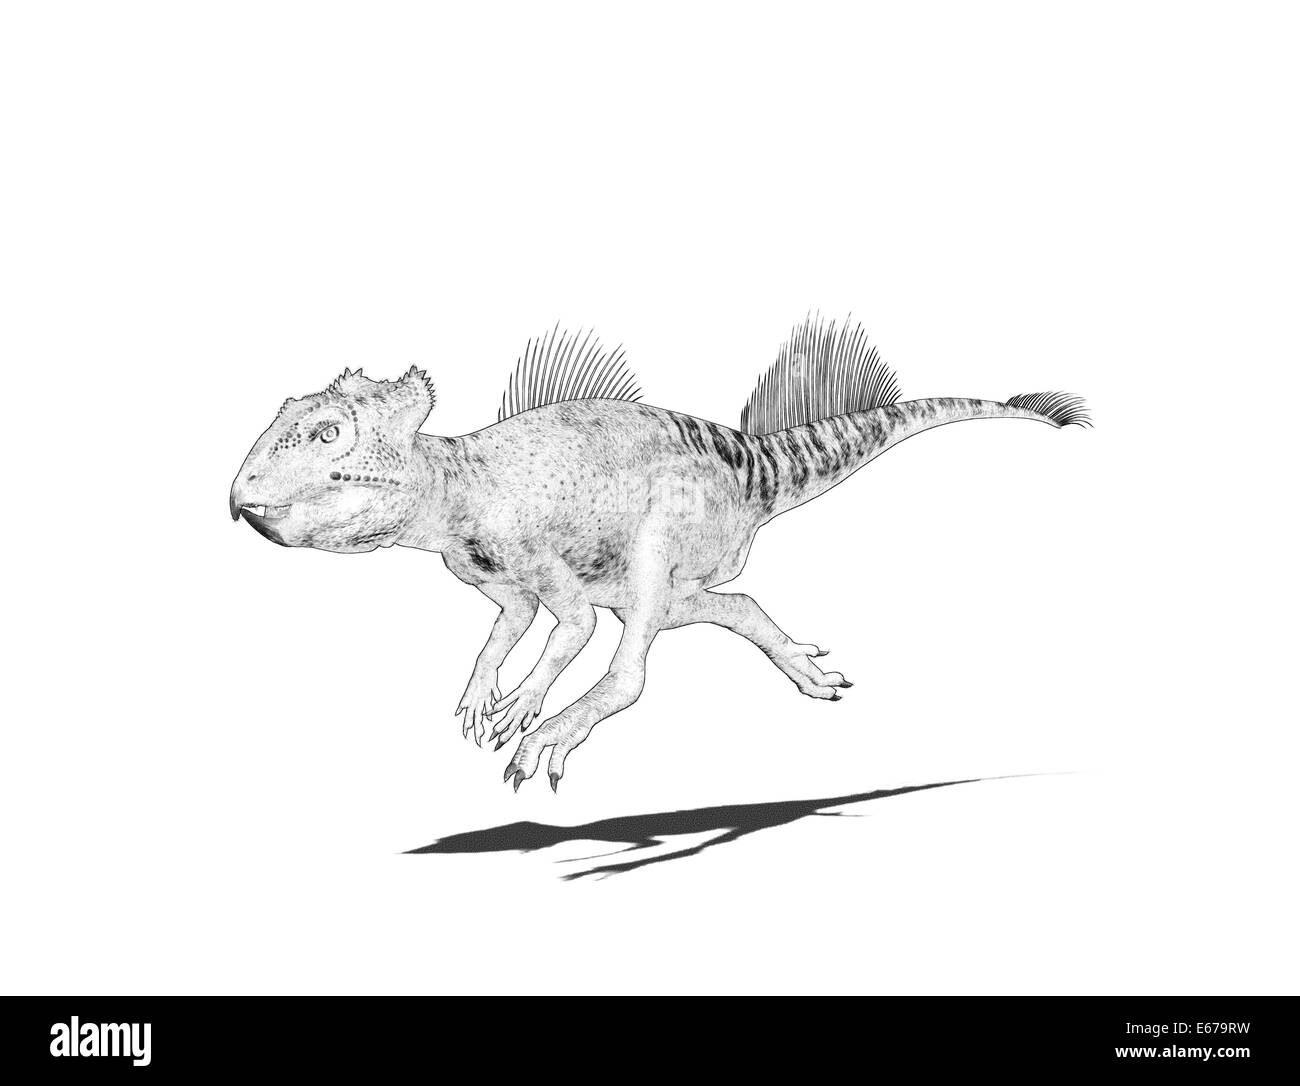 Dinosaurier Archaeoceratops / dinosaur Archaeoceratops Stock Photo